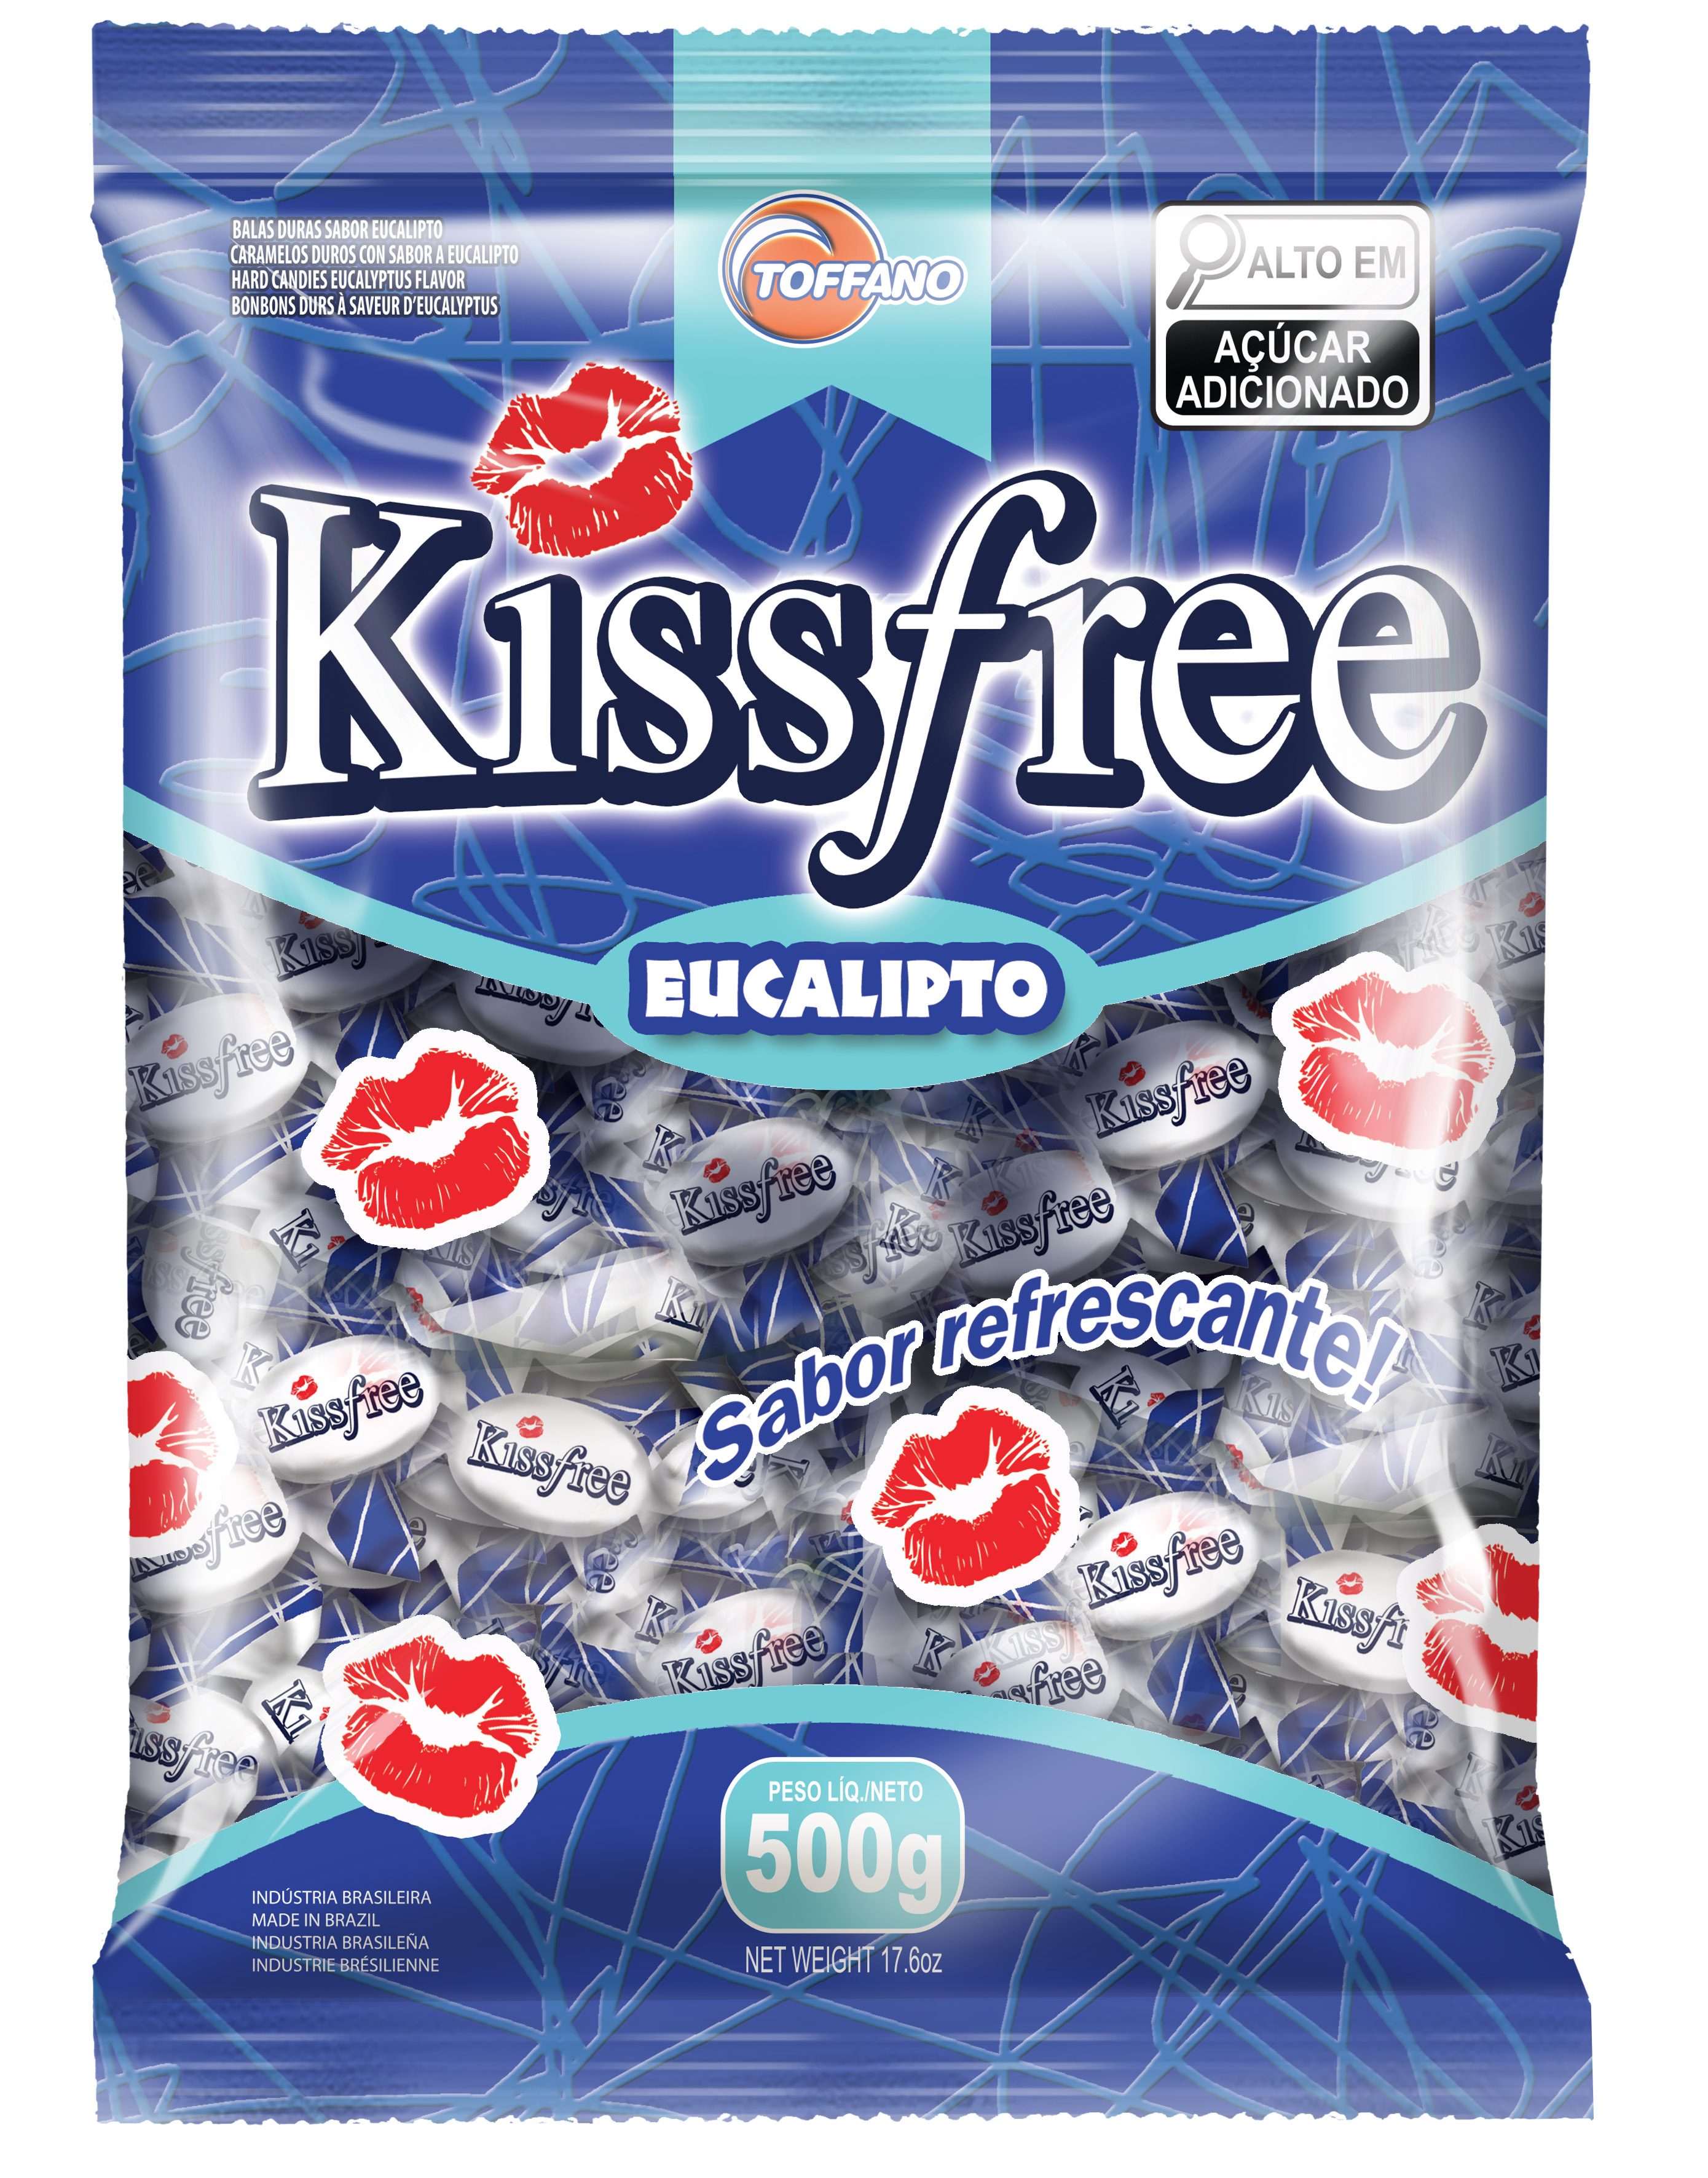 Kiss Free - Eucalipto